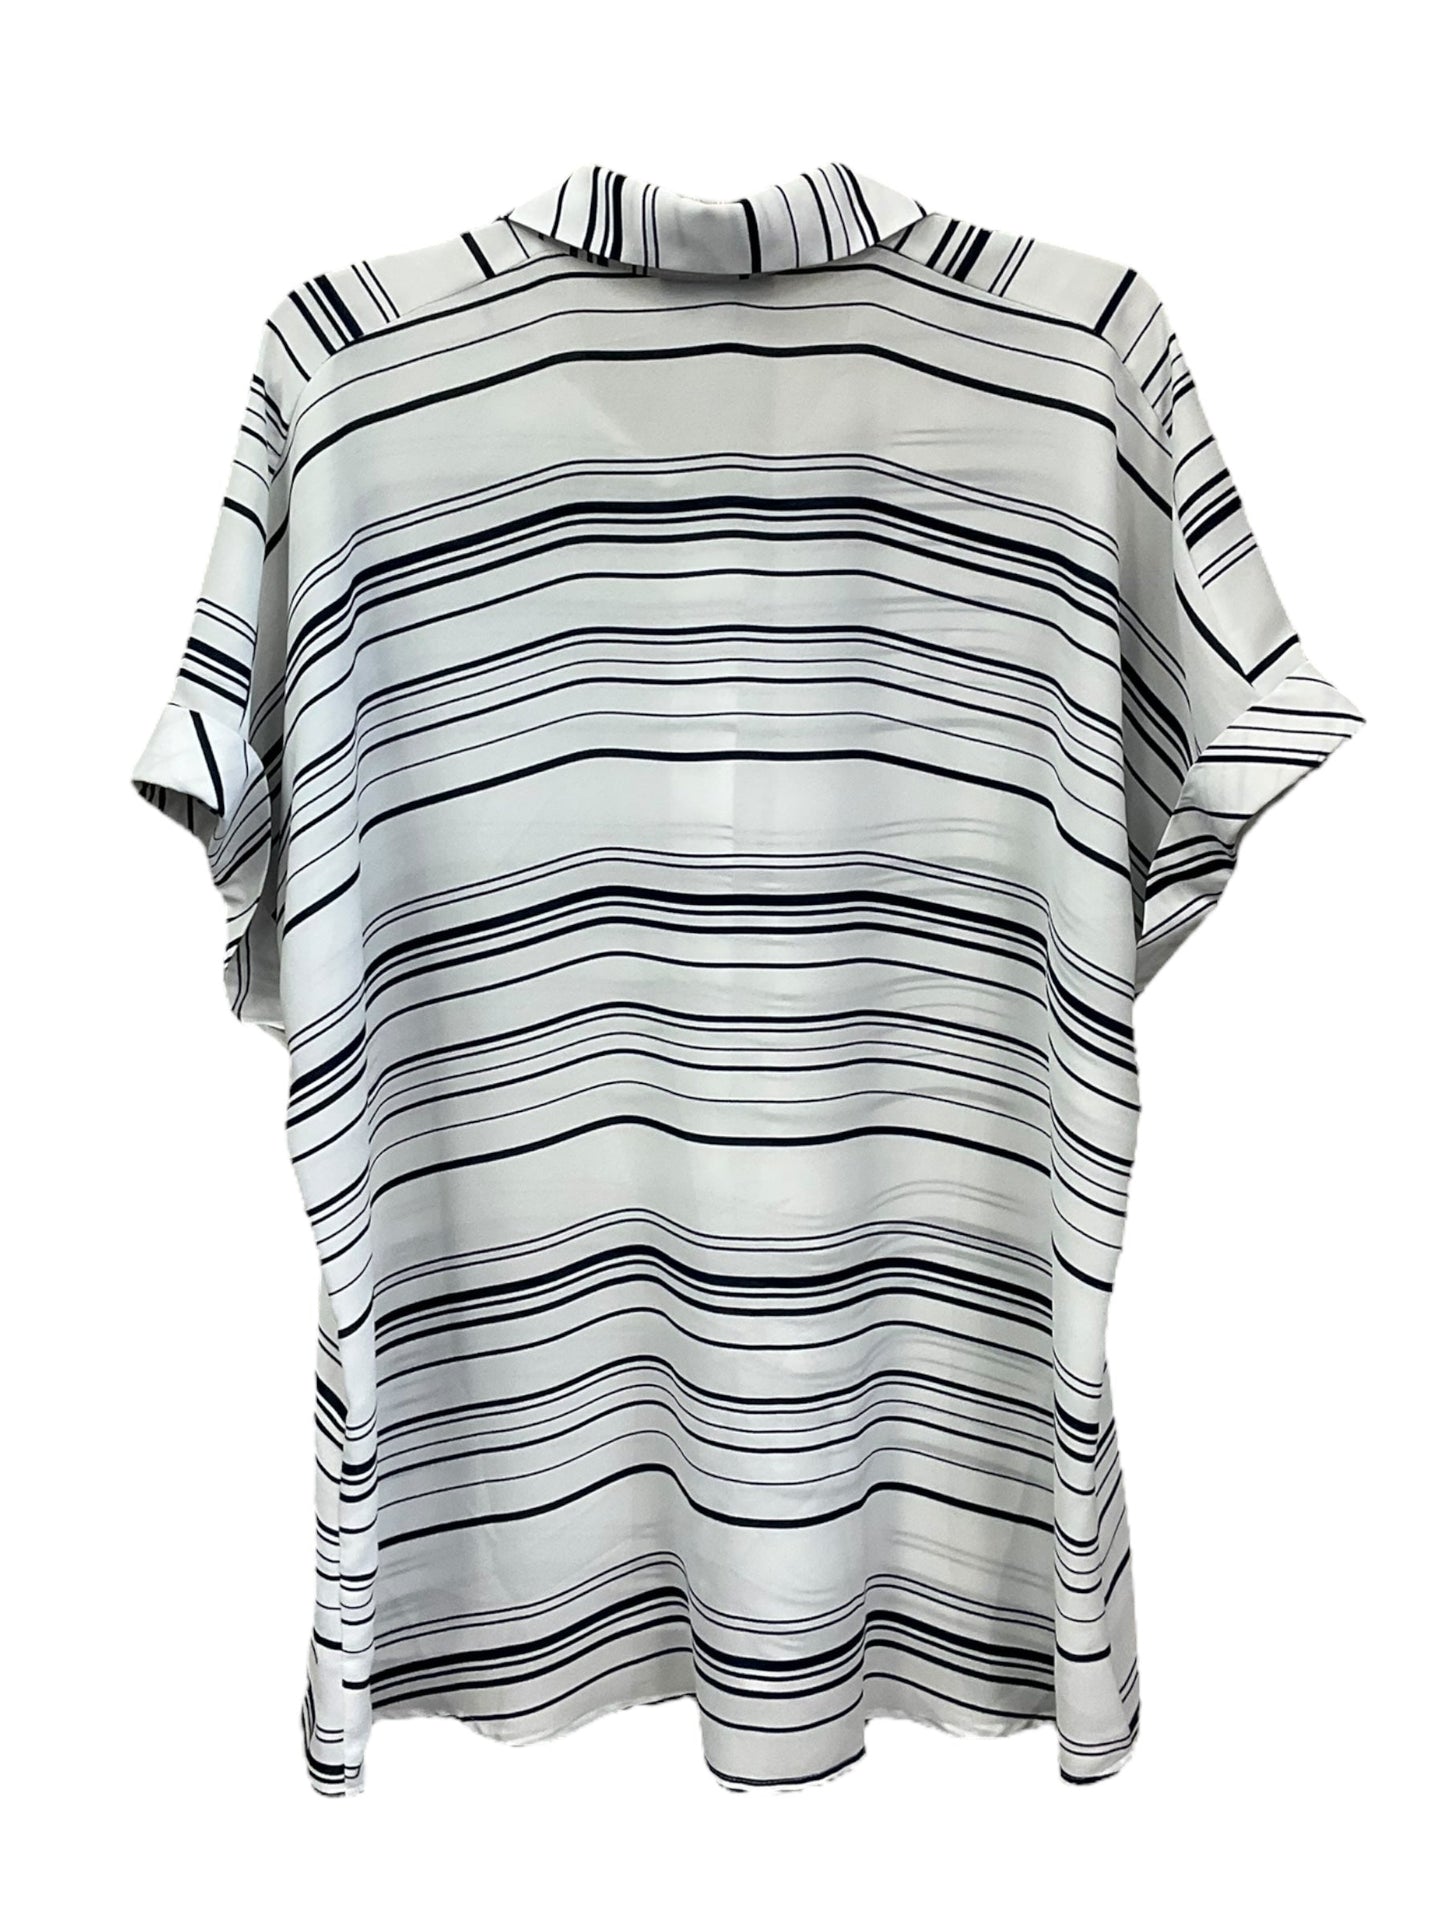 Striped Pattern Top Short Sleeve Alfani, Size 1x